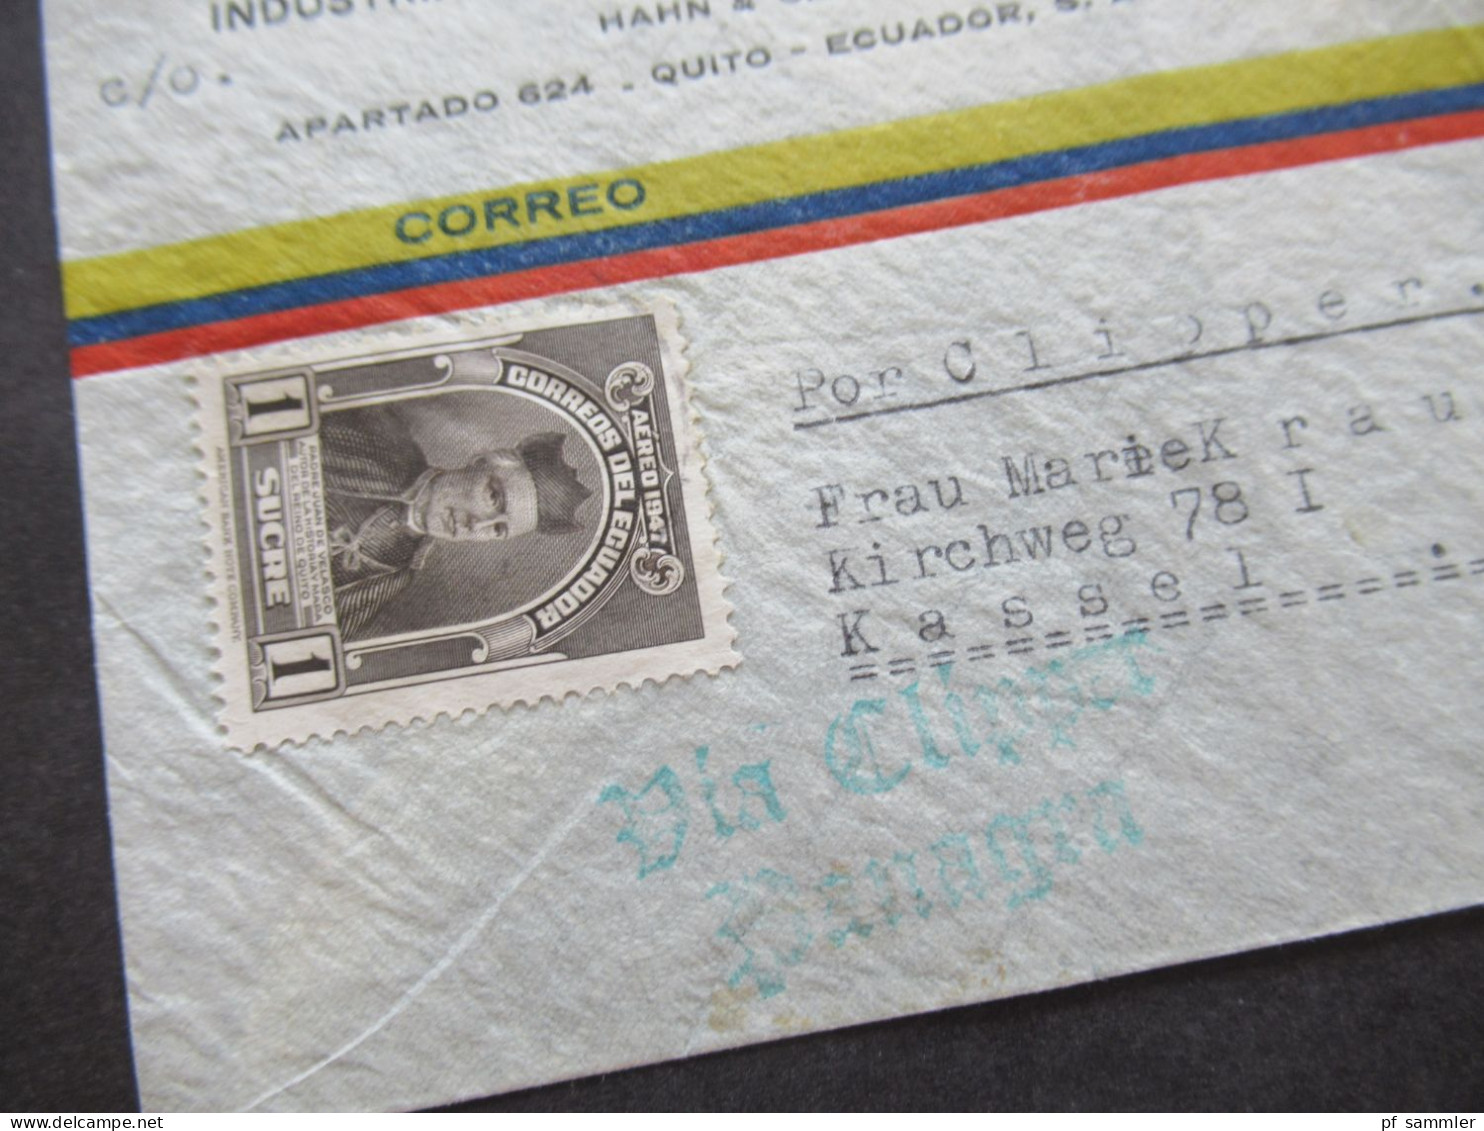 Ecuador Um 1940 Überseebrief Quito - Kassel Mit 2x Grüner Stempel Via Clipper (Banagra??) - Equateur